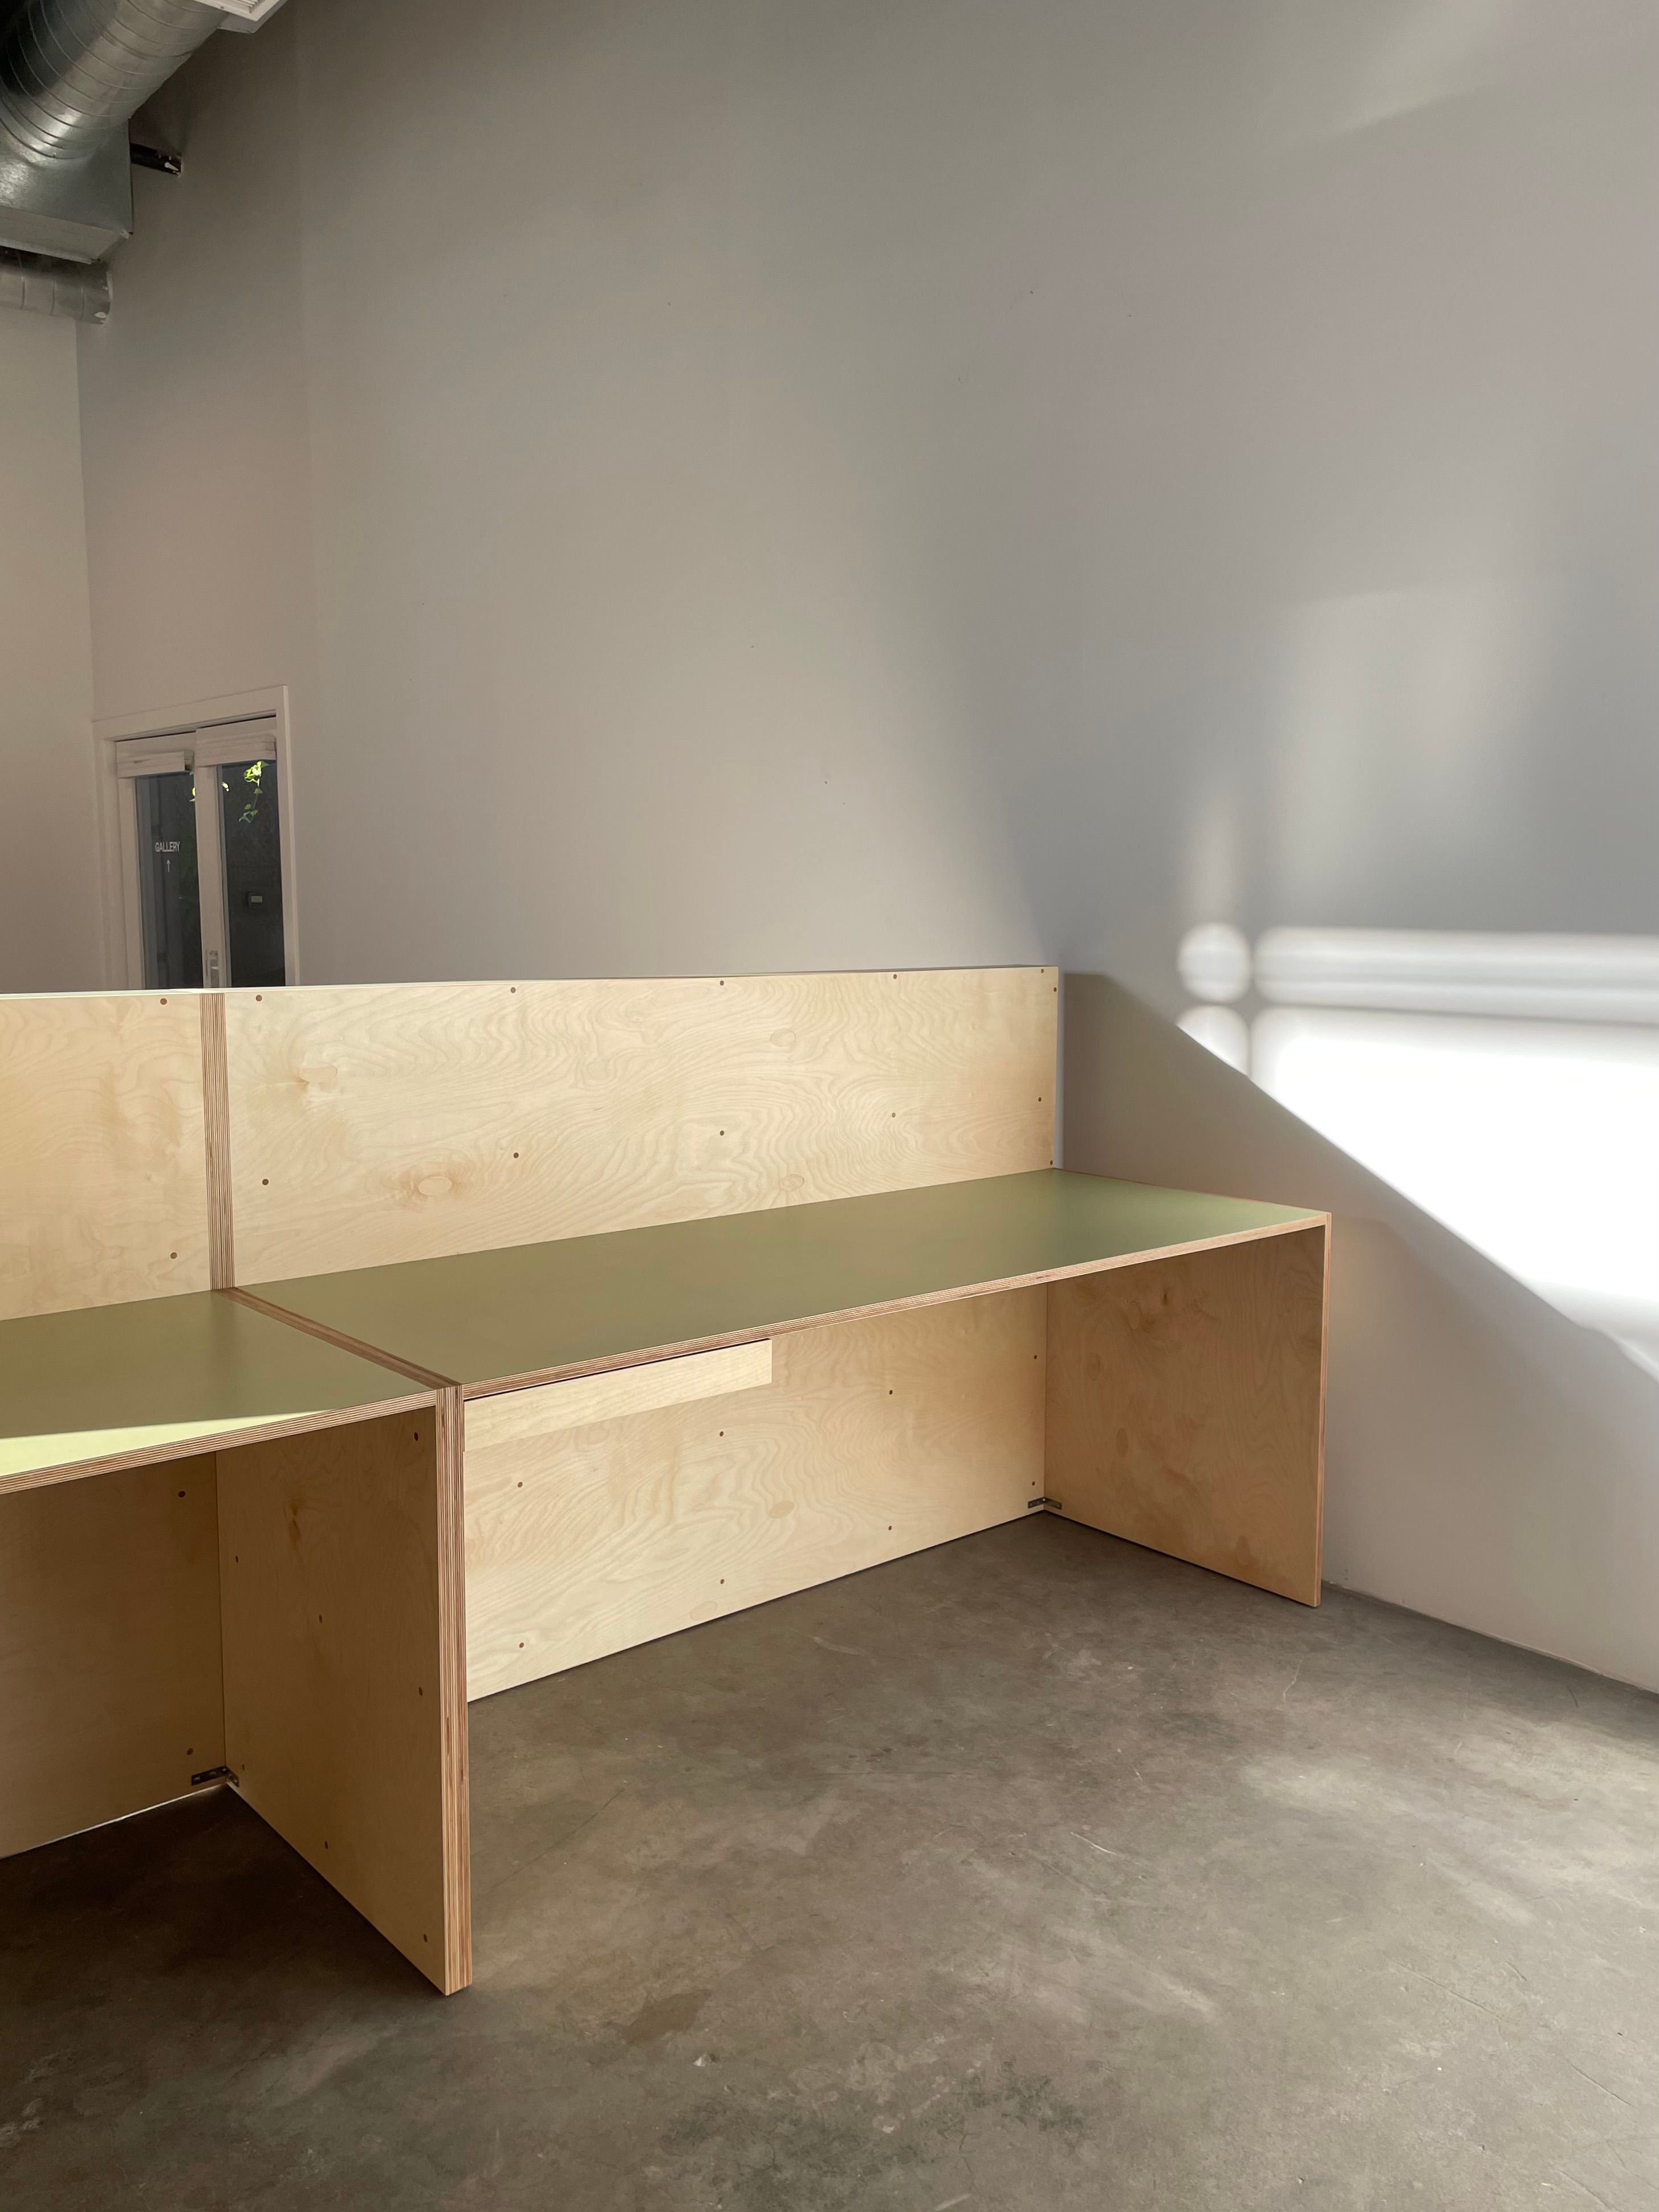  Reception Desk - Murmurs Gallery product image 5